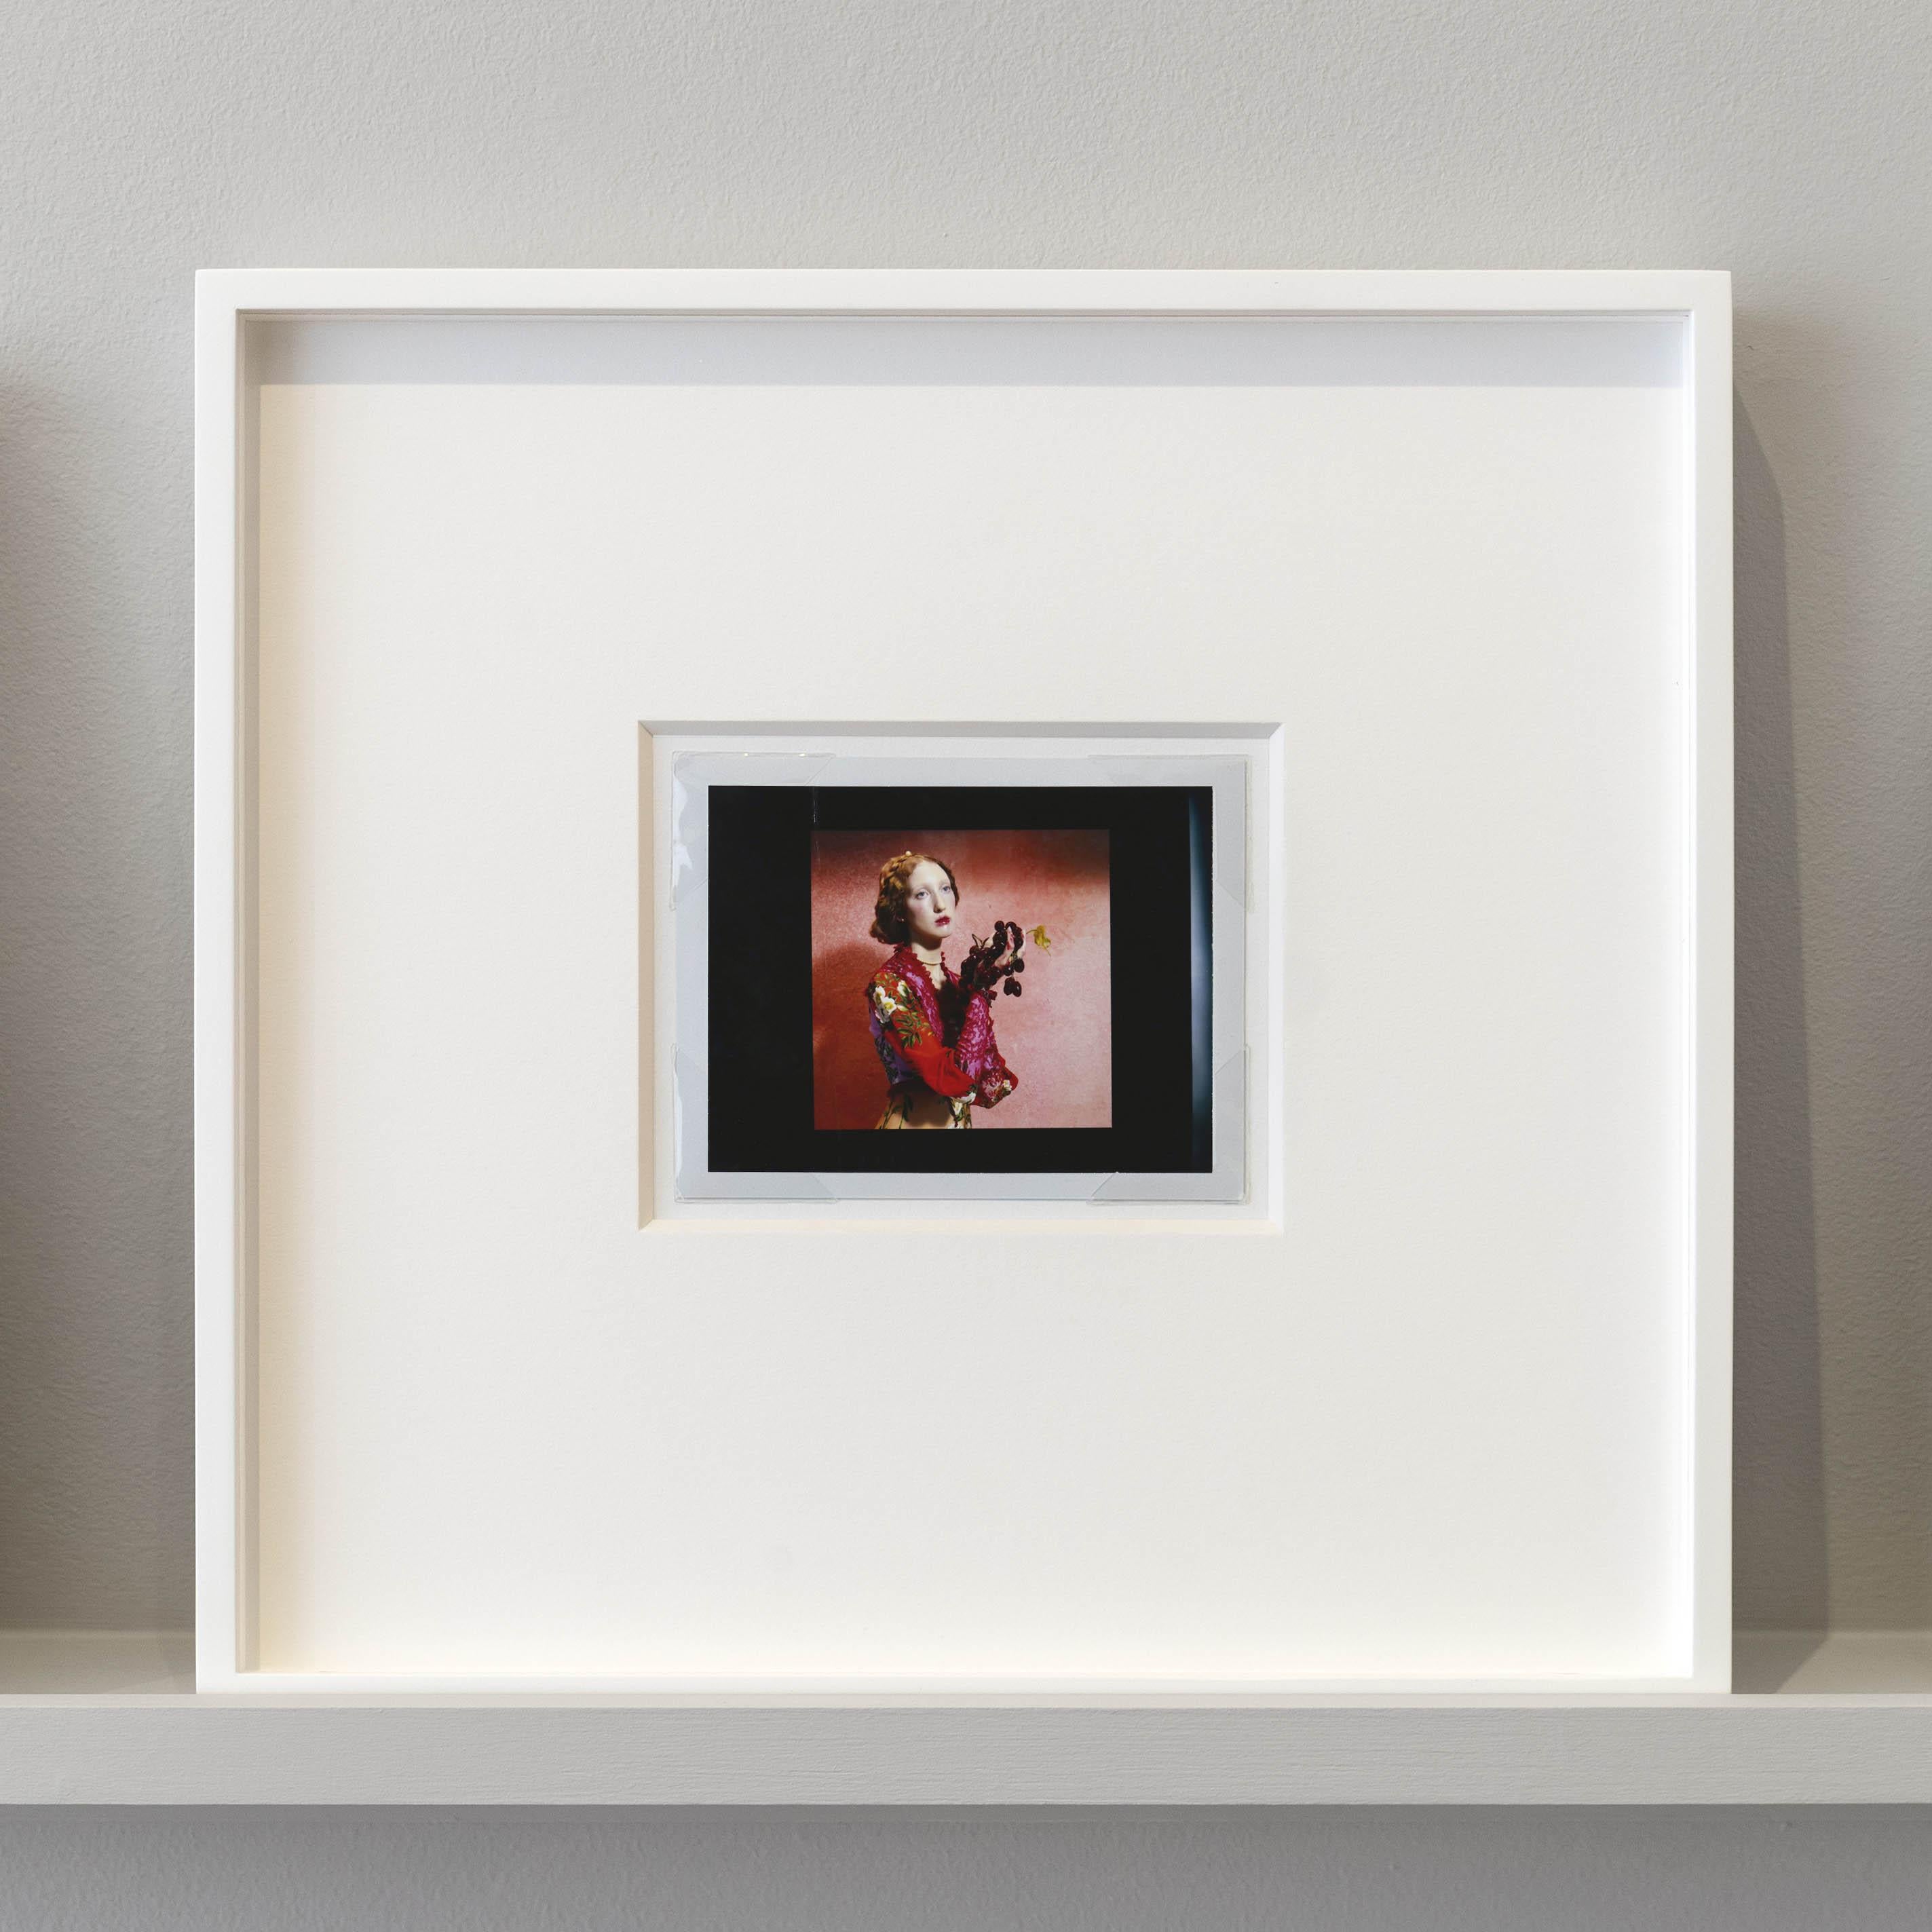 (after Botticelli) - study II 2017 - Miles Aldridge (Unique Polaroid print) For Sale 1